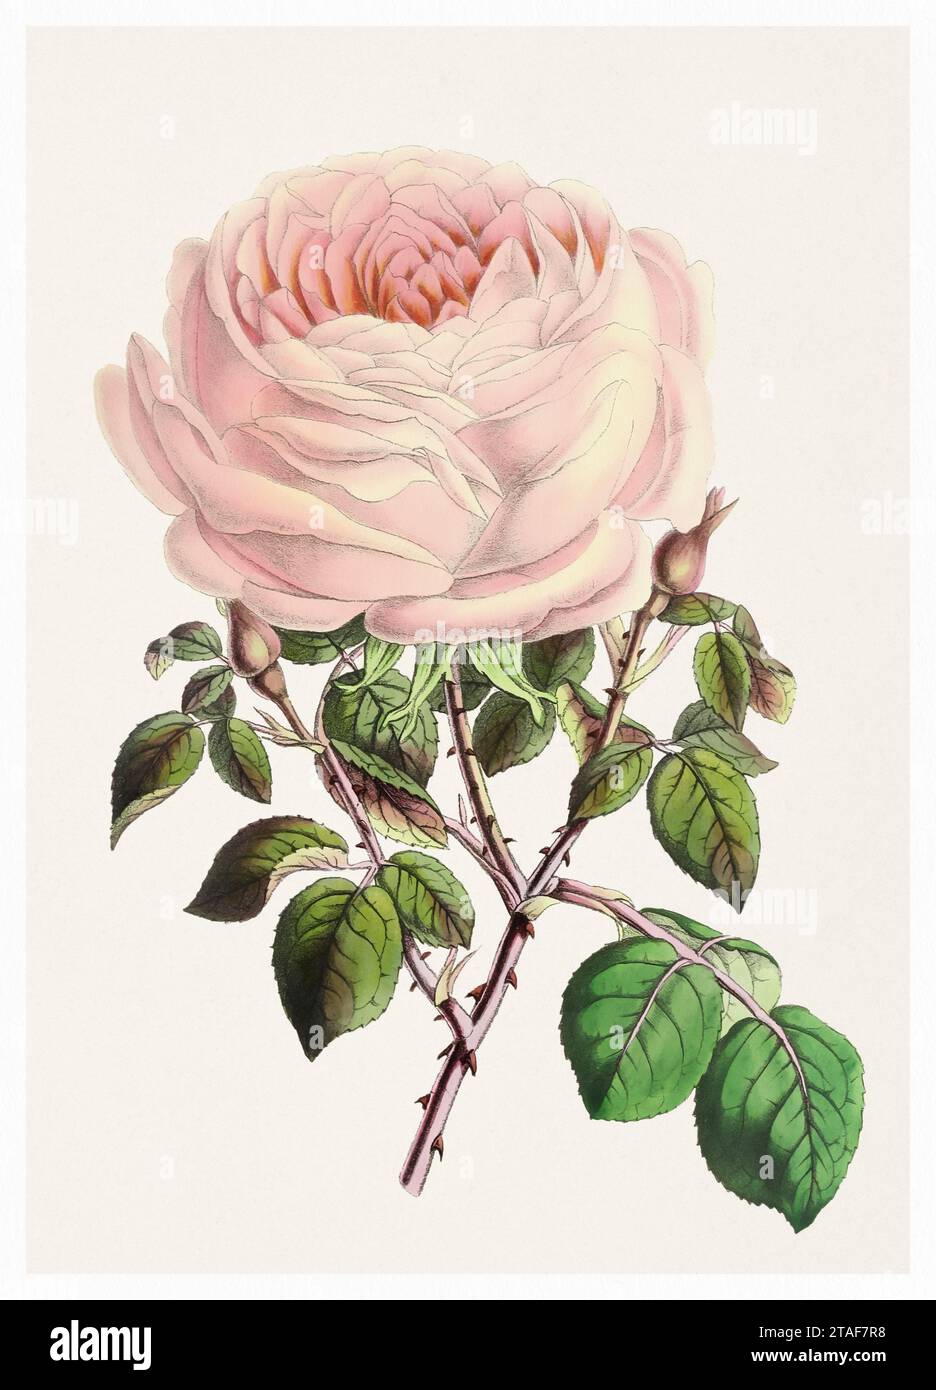 Rose Flower. Digital vintage-style flower illustration on a textured beige background. Stock Photo